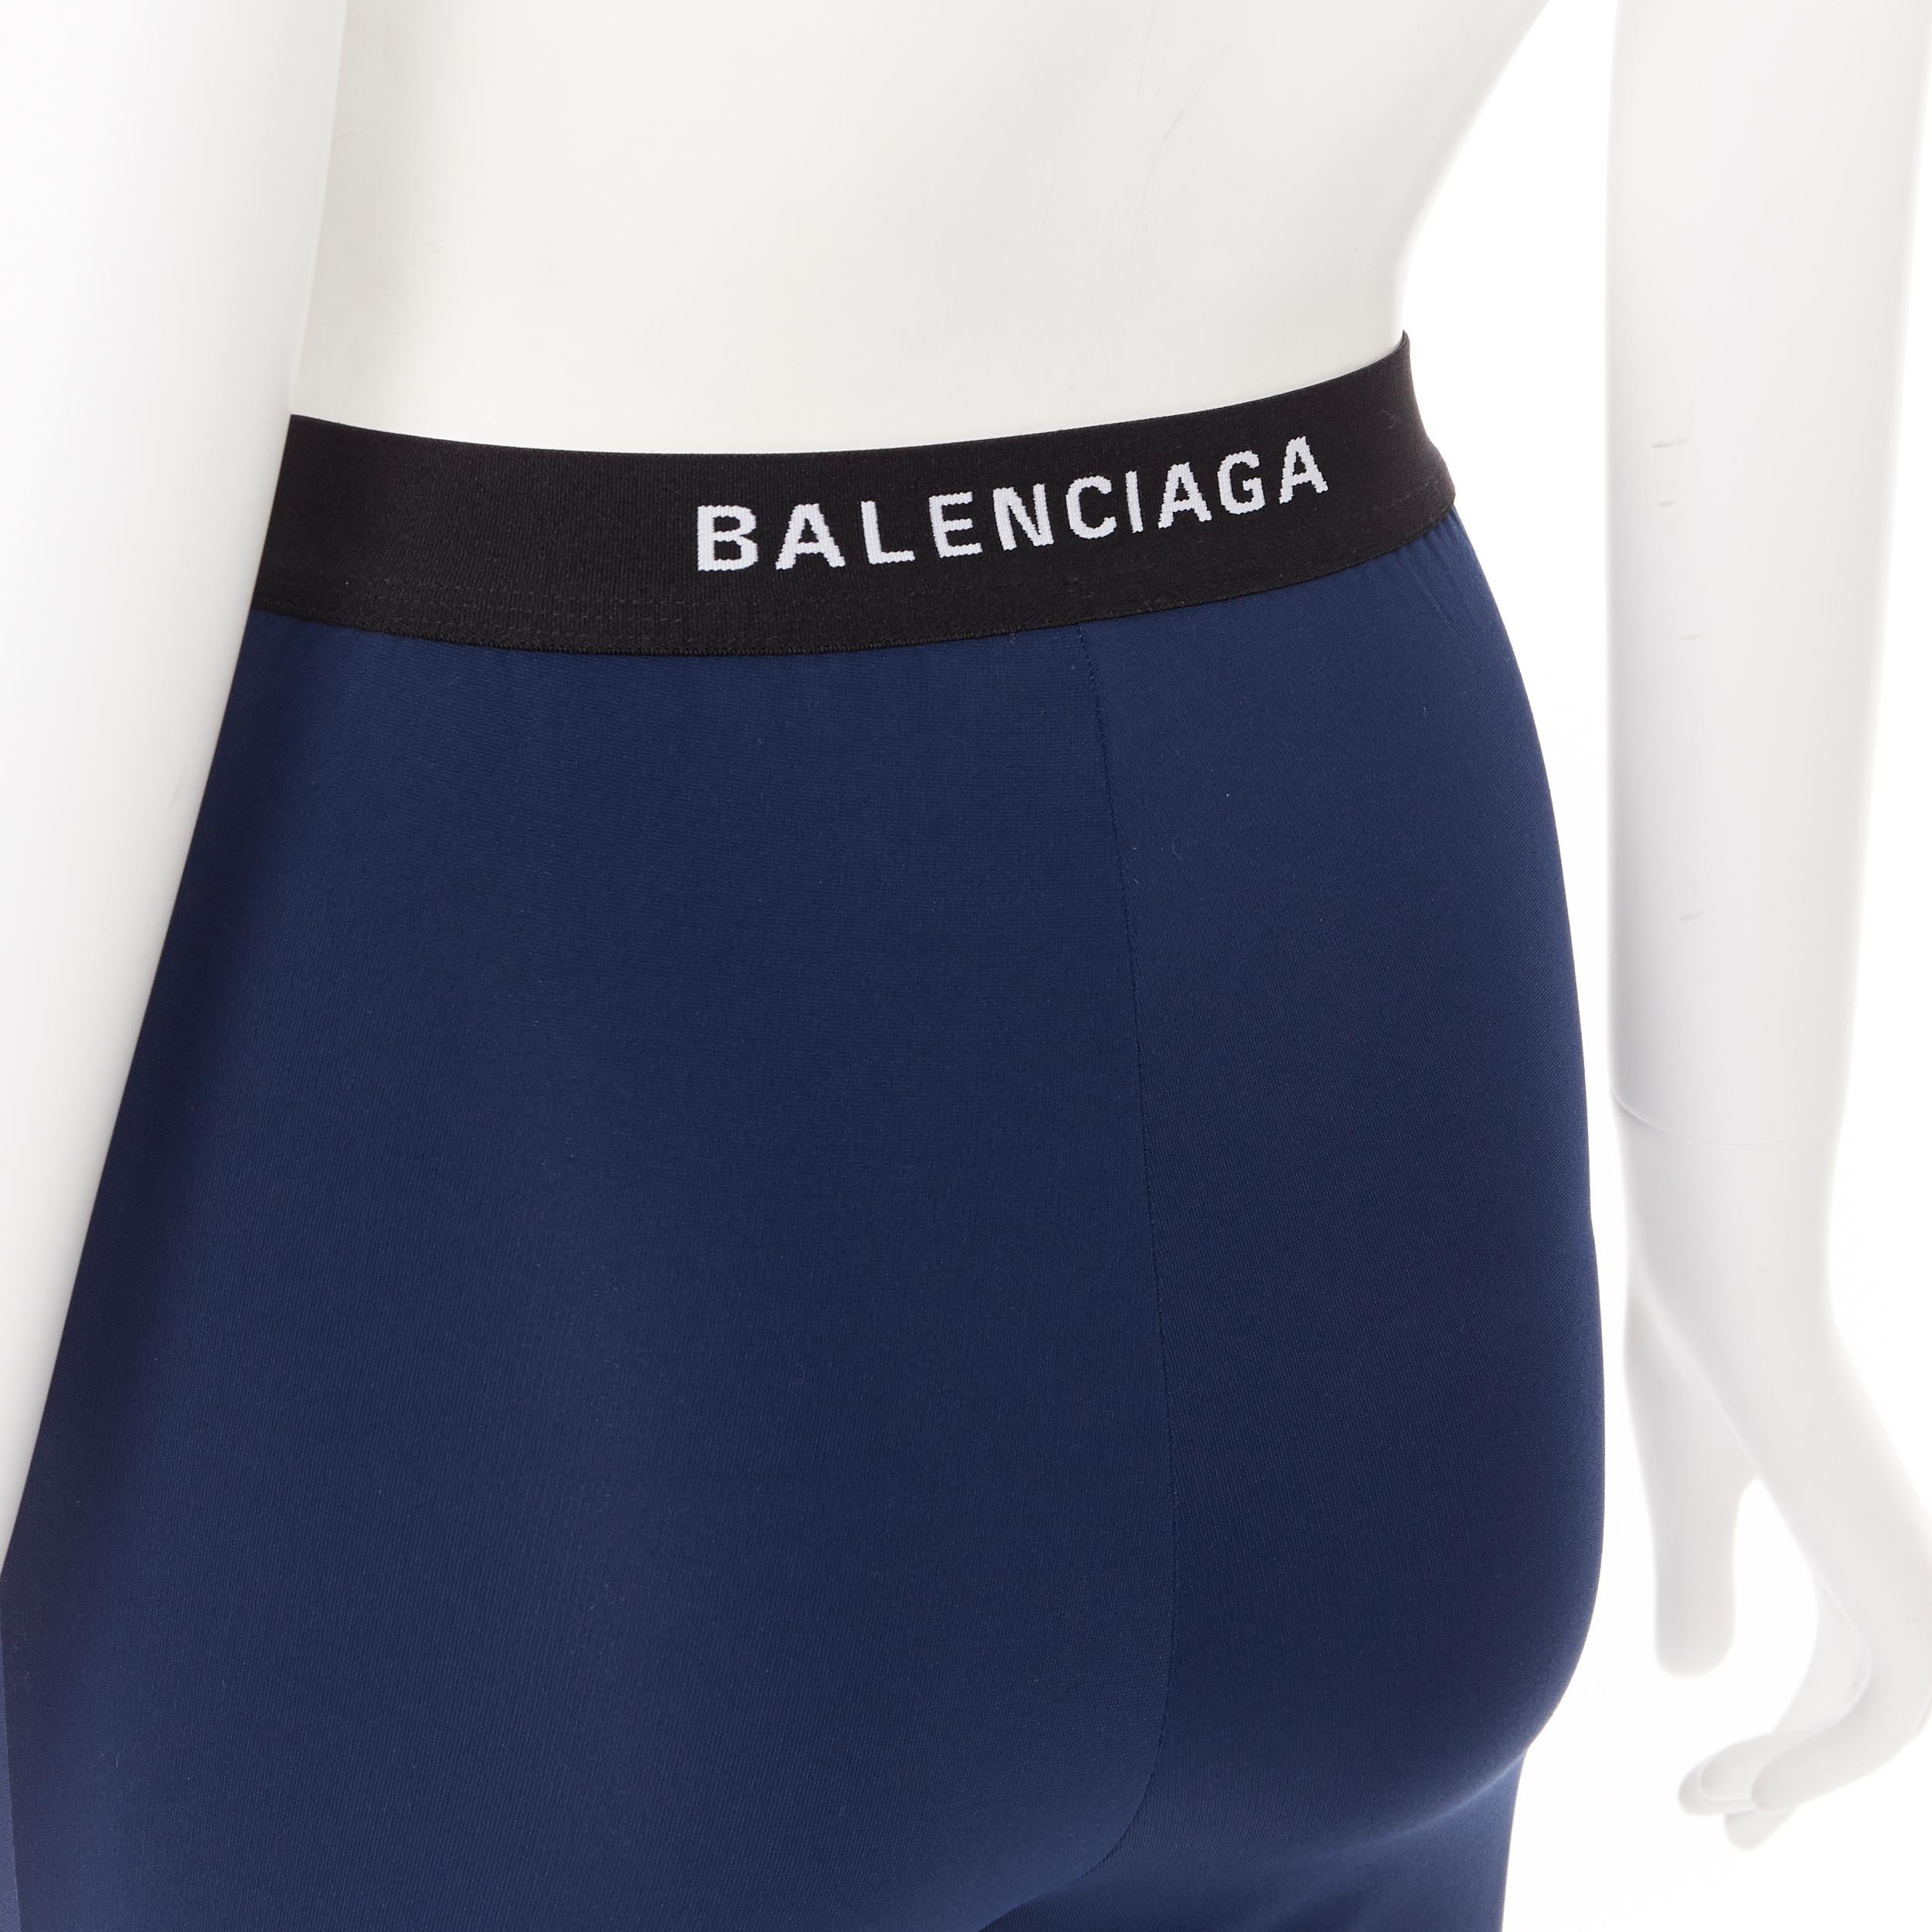 BALENCIAGA DEMNA dark blue front seam logo band dual szip legging pants FR34 
Brand: Balenciaga
Designer: Demna Gvasalia
Model Name / Style: Legging pants
Material: Viscose blend
Color: Blue
Pattern: Solid
Extra Detail: Logo waistband. Dual zip